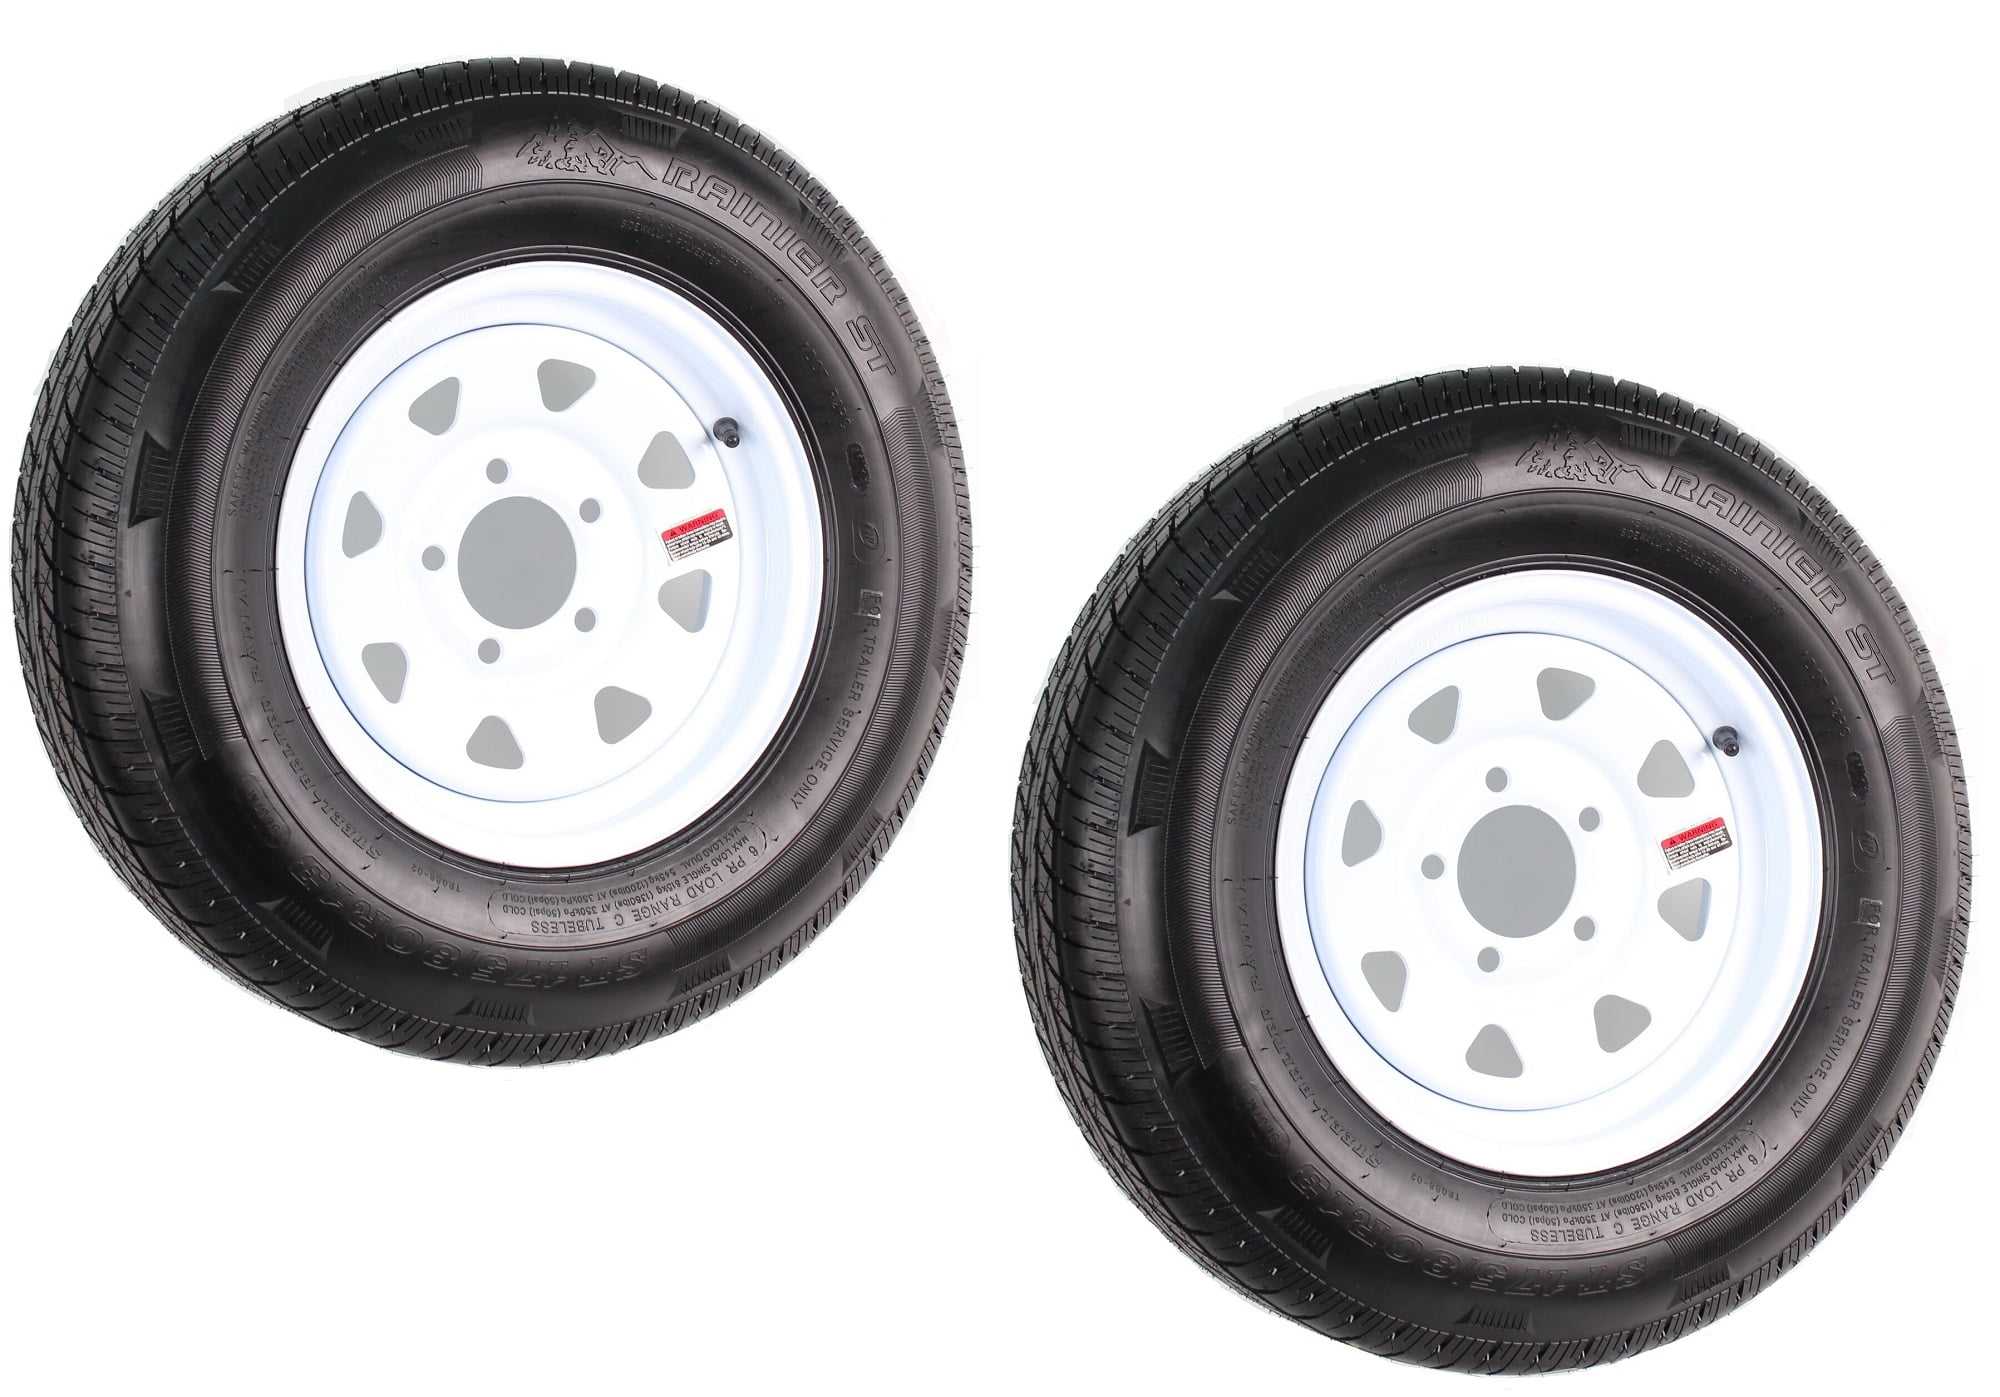 Two Trailer Rims Wheels 13 in 13X4.5 5 Lug Hole Bolt White Spoke Design